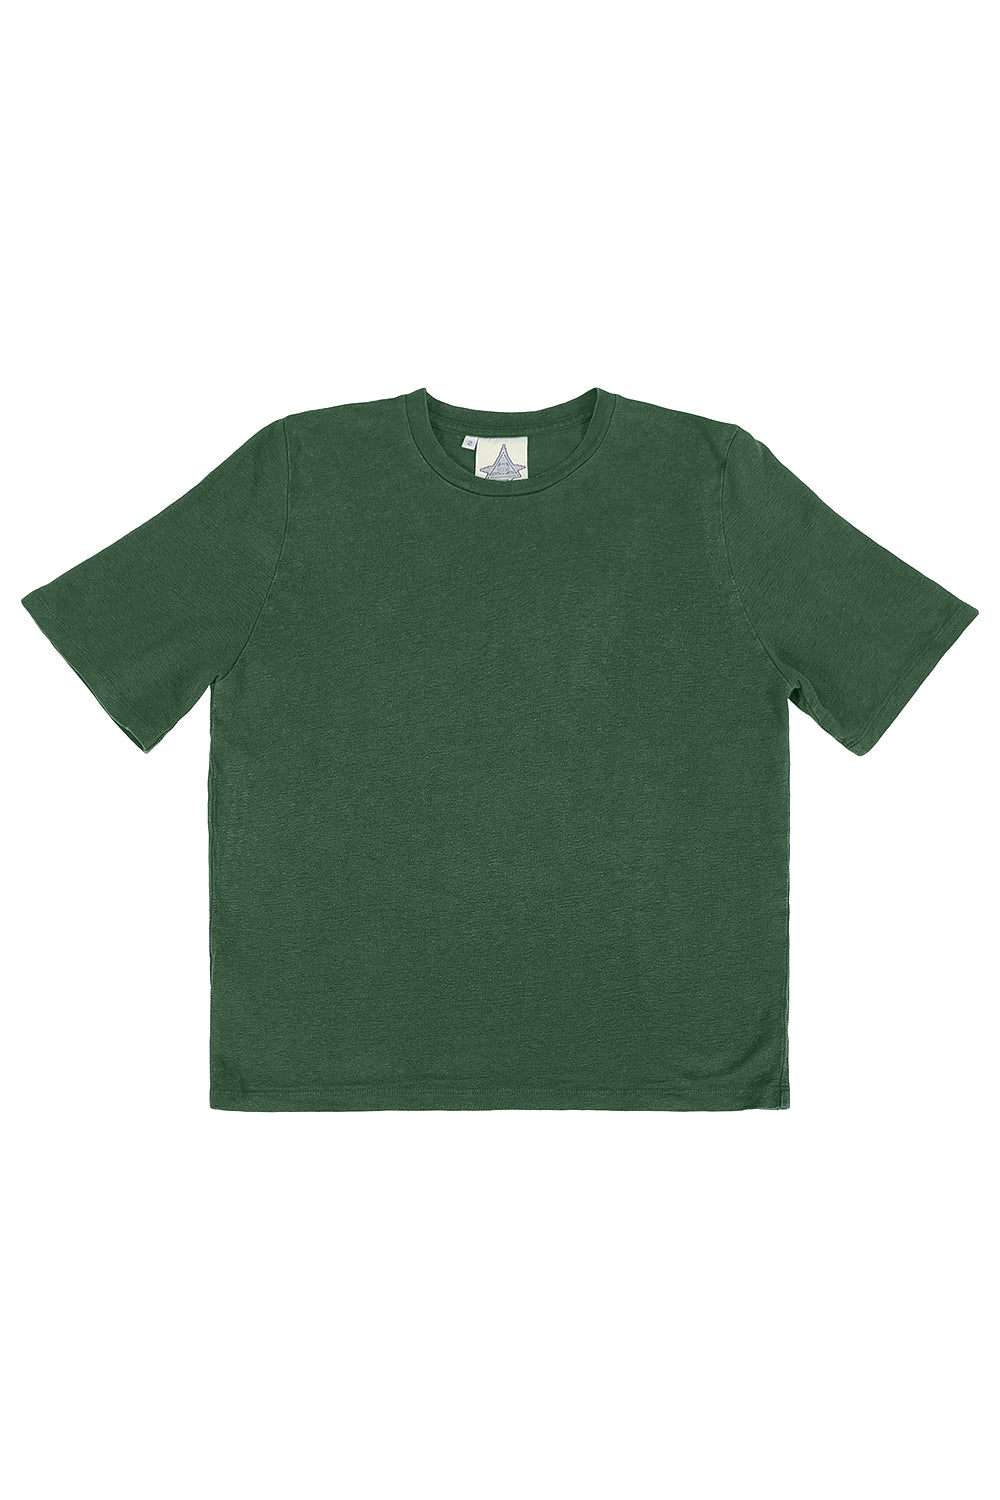 Dakota - 100% Hemp Cropped Tee | Jungmaven Hemp Clothing & Accessories / Color: Hunter Green